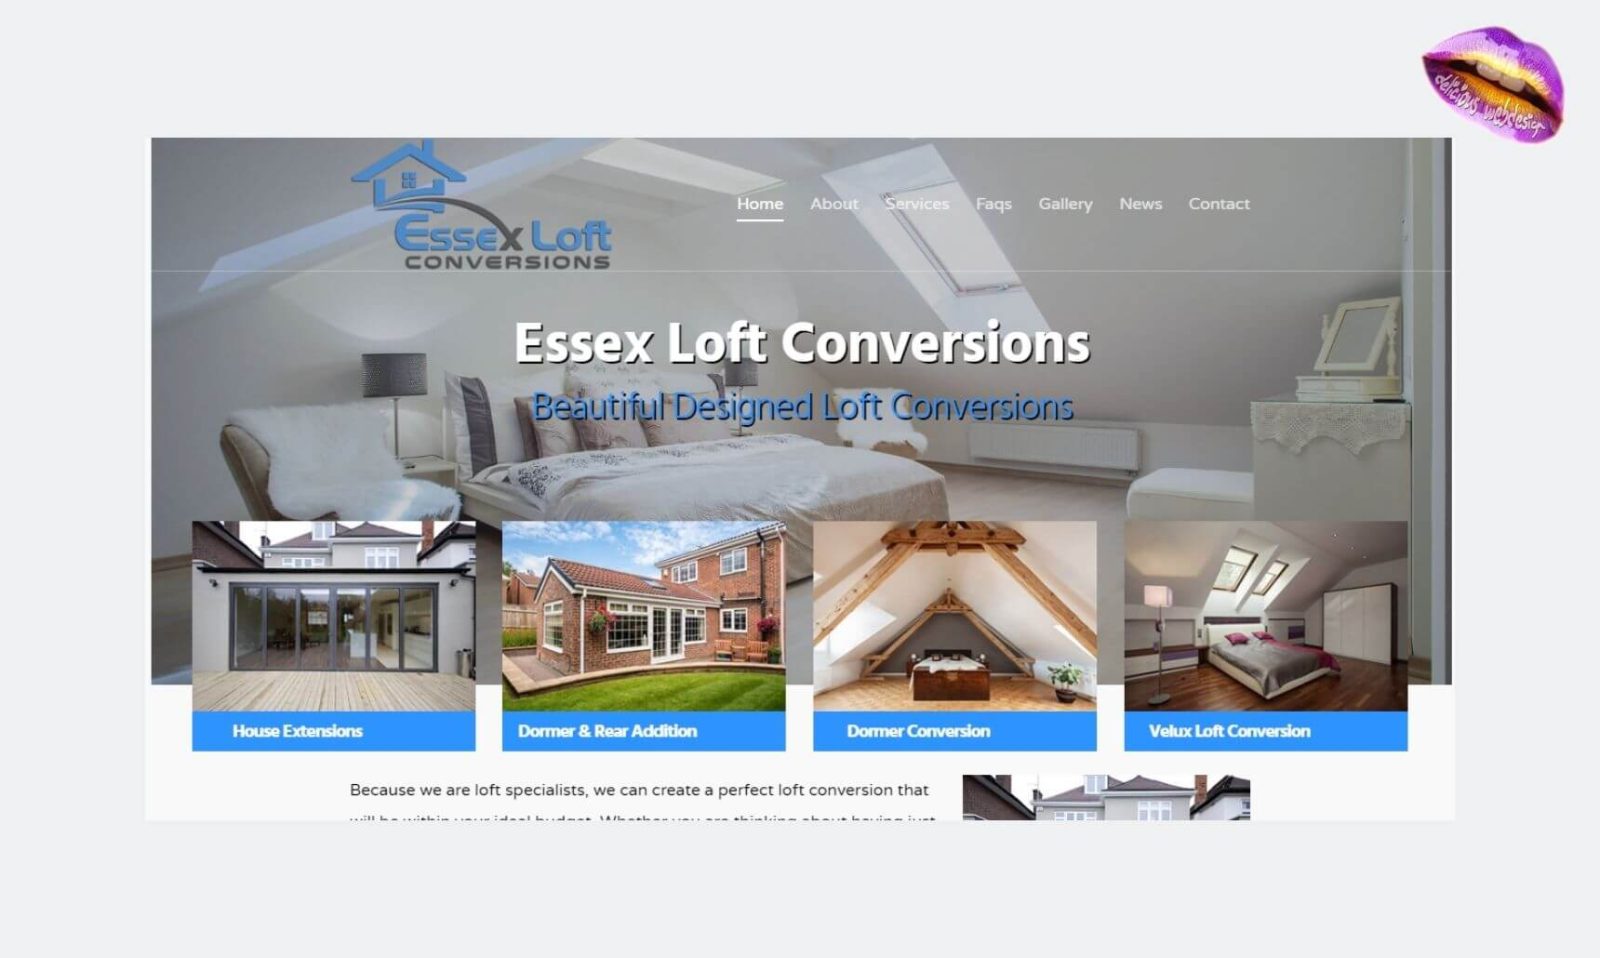 Essex Loft Conversions